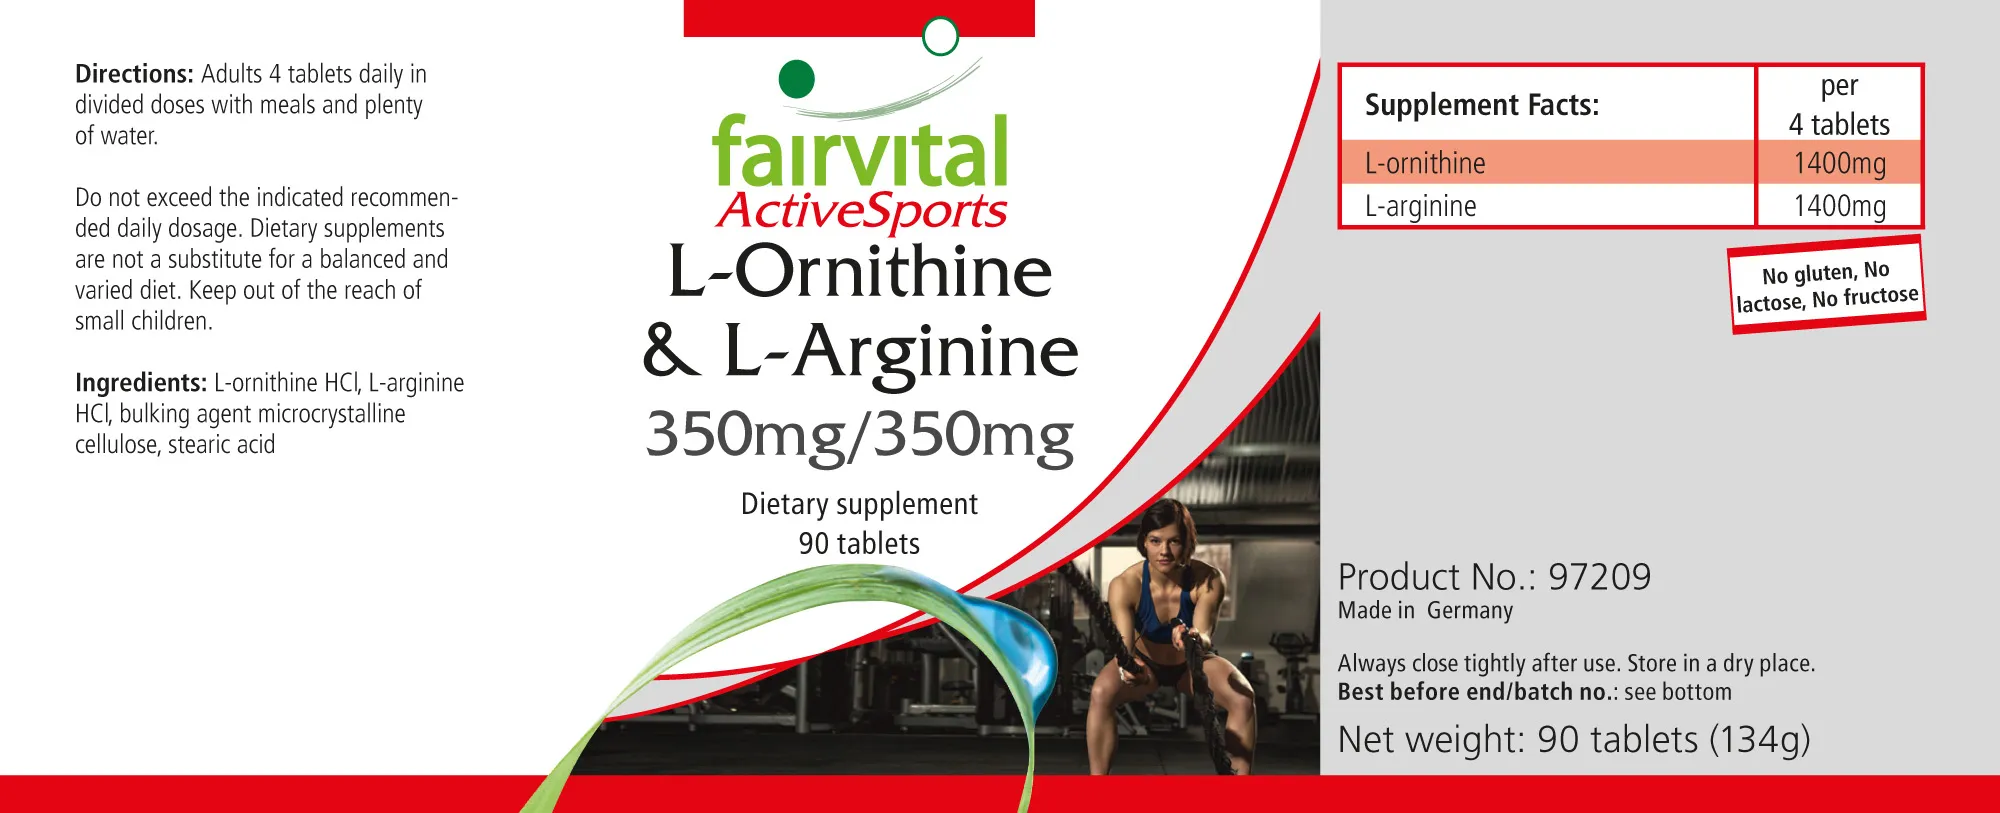 L-ornithine & L-arginine 350mg/350mg - 90 tabletten